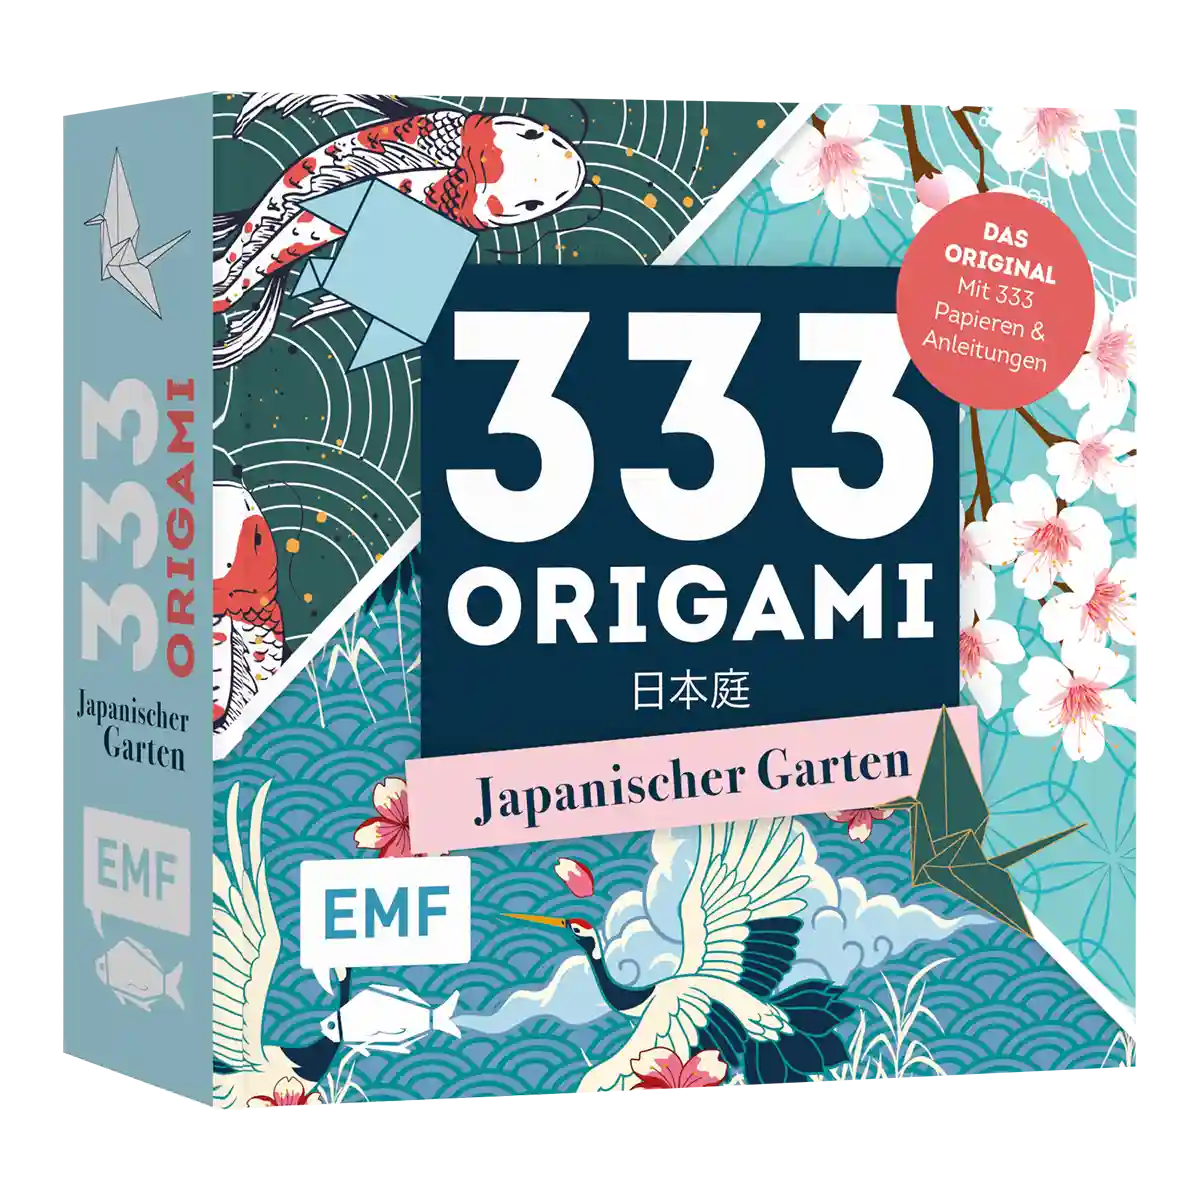 EMF 333 Origami / Japanischer Garten